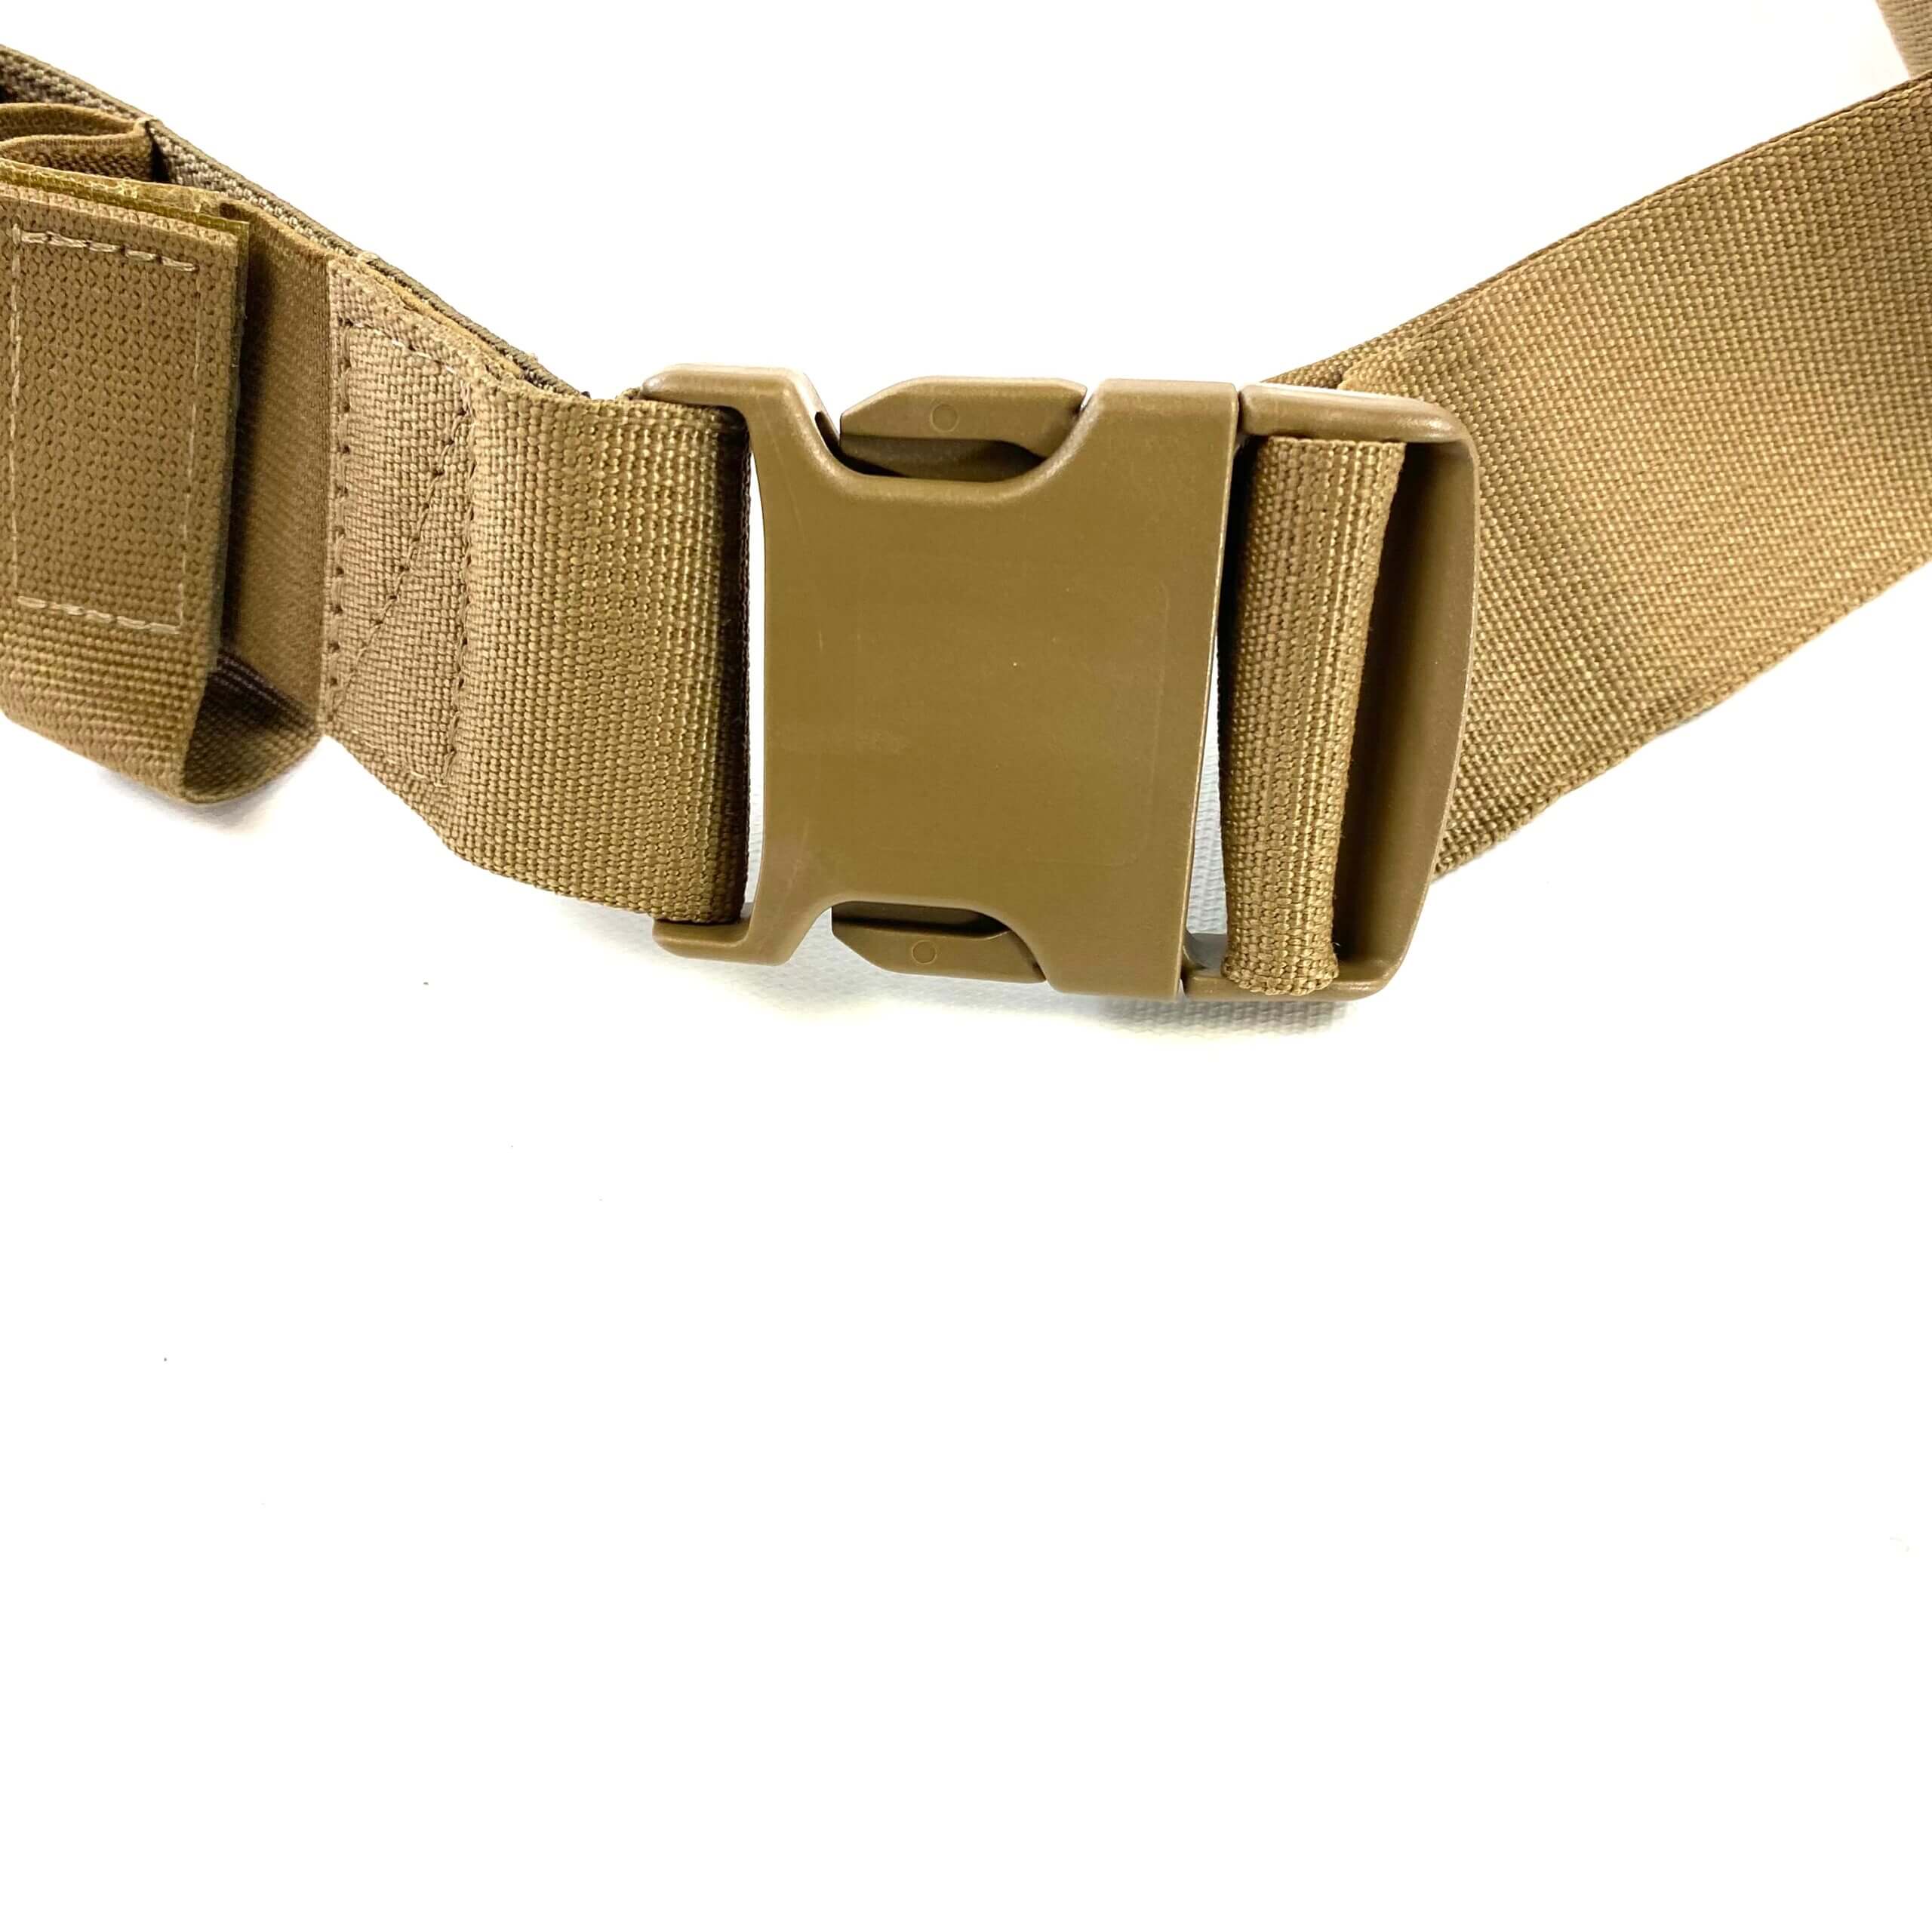 40mm belt buckle